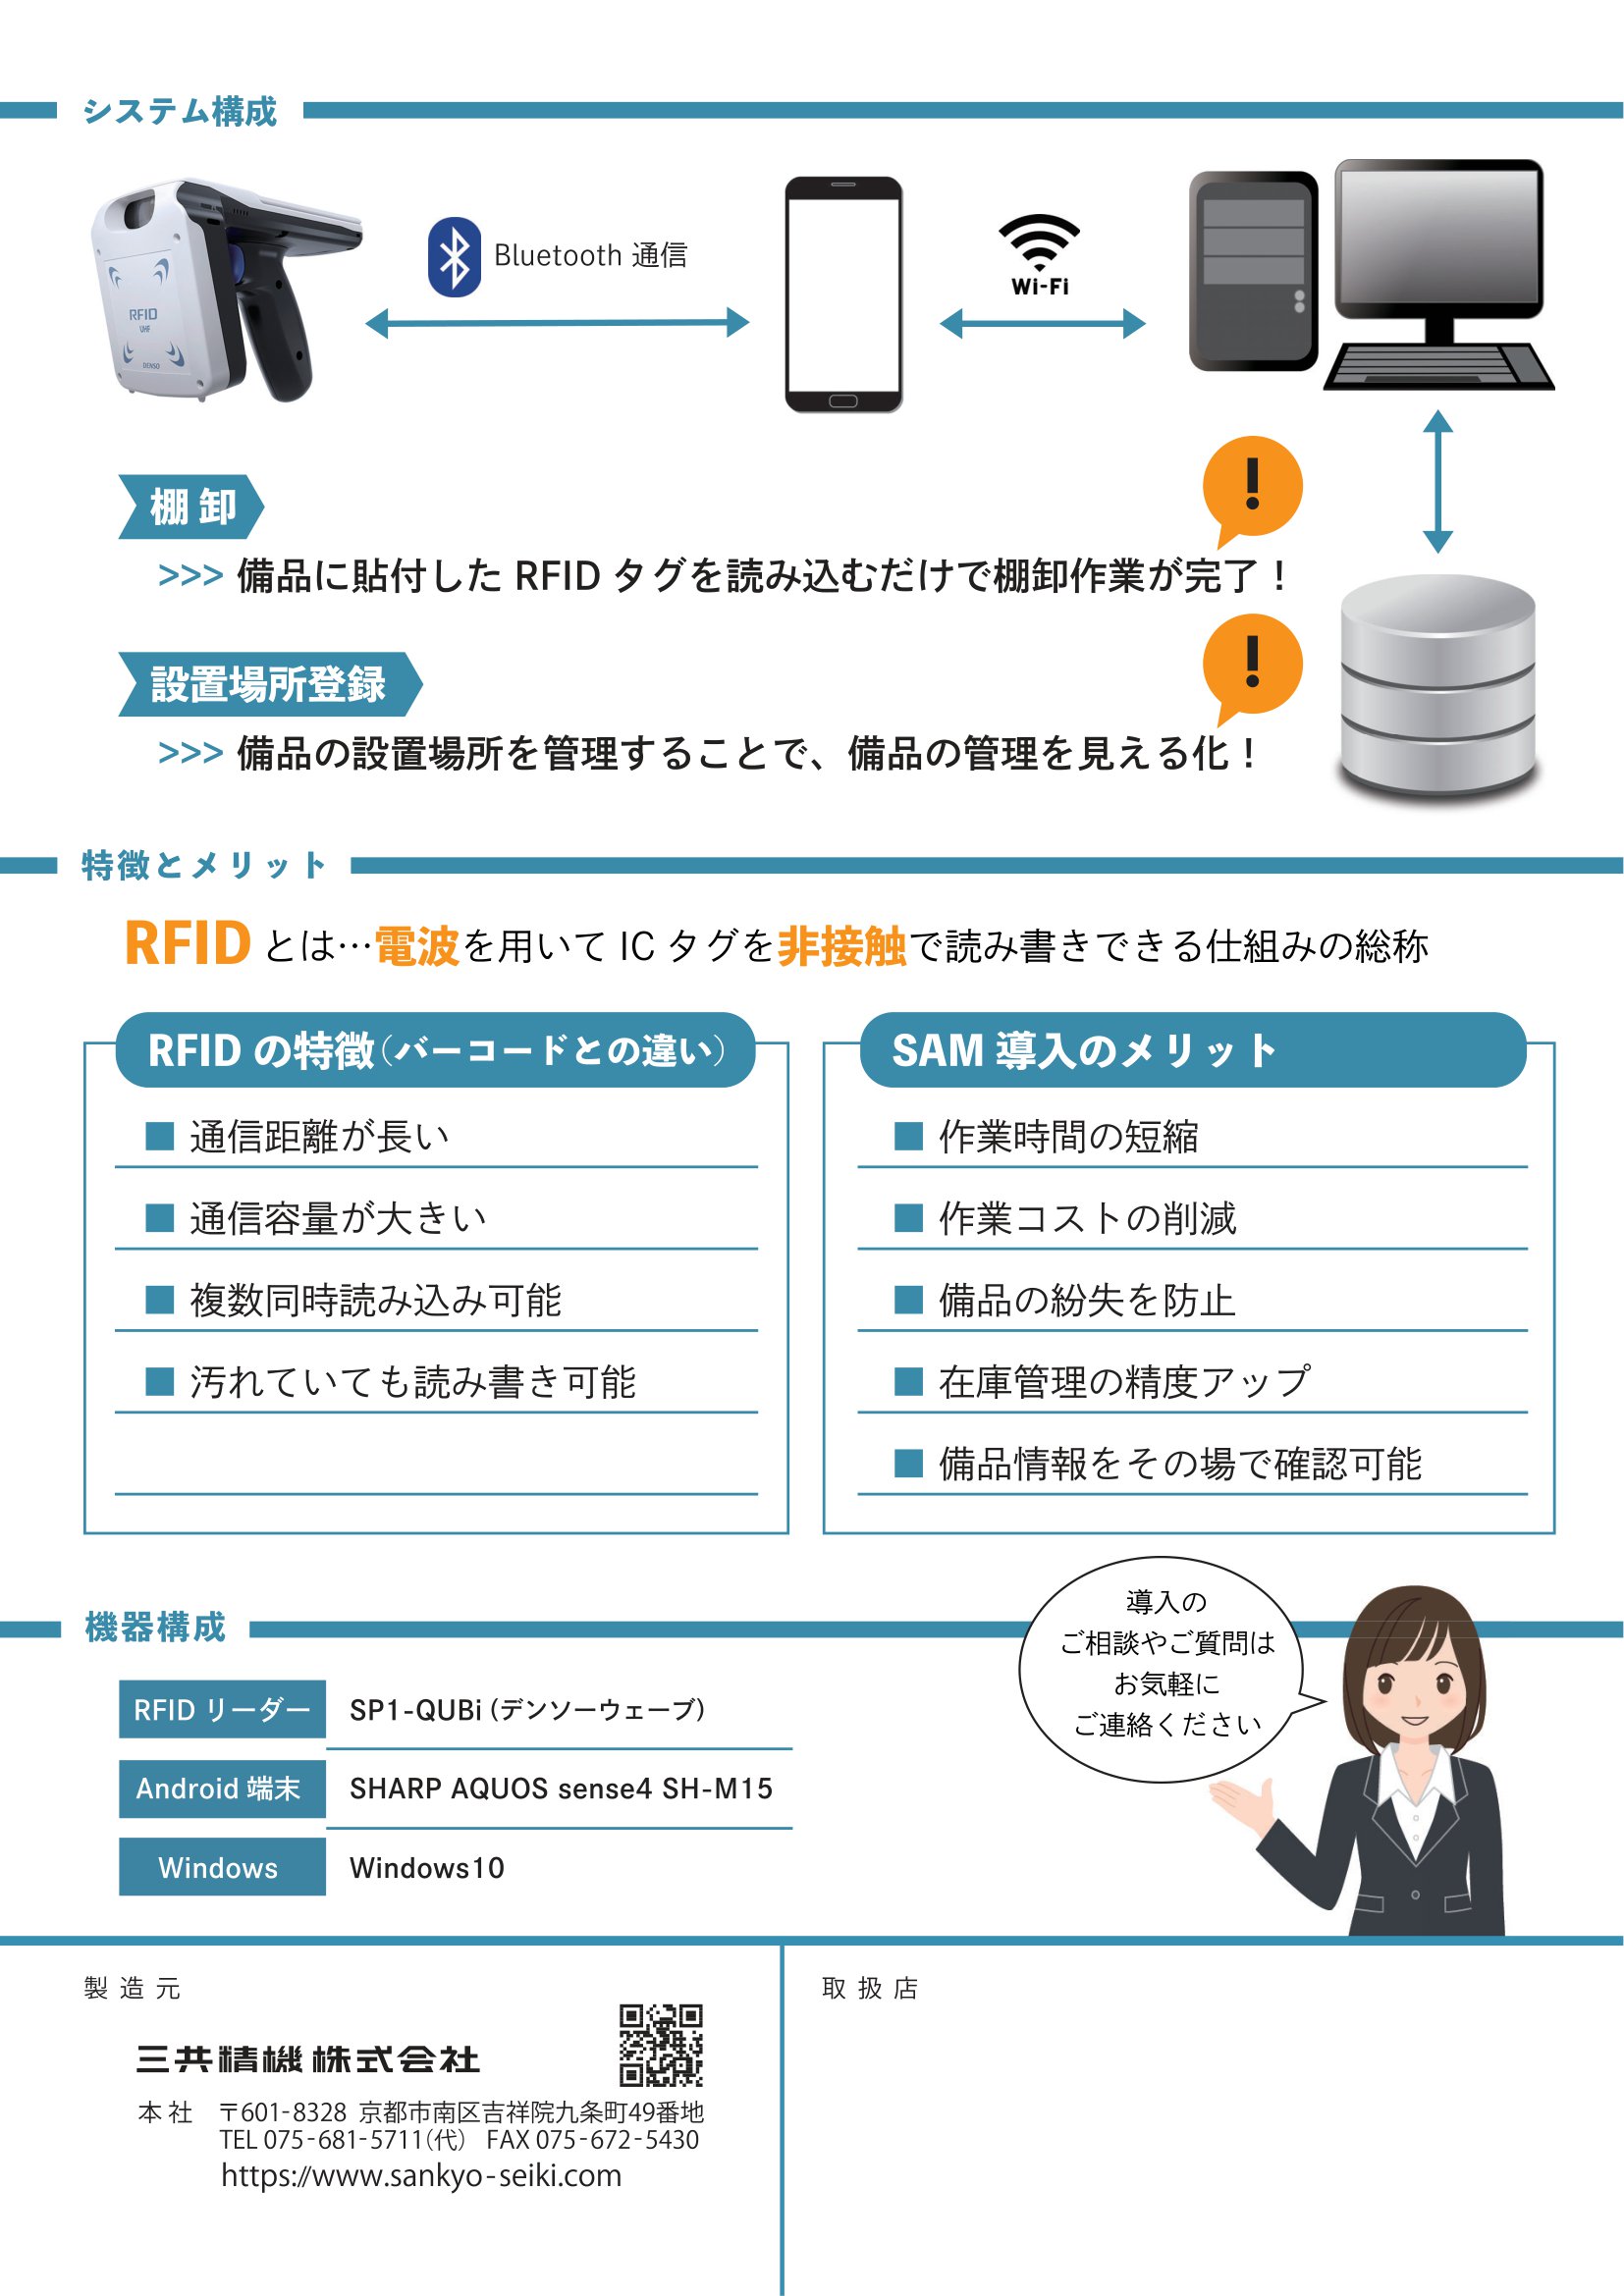 RFID資産管理システム【SAM】